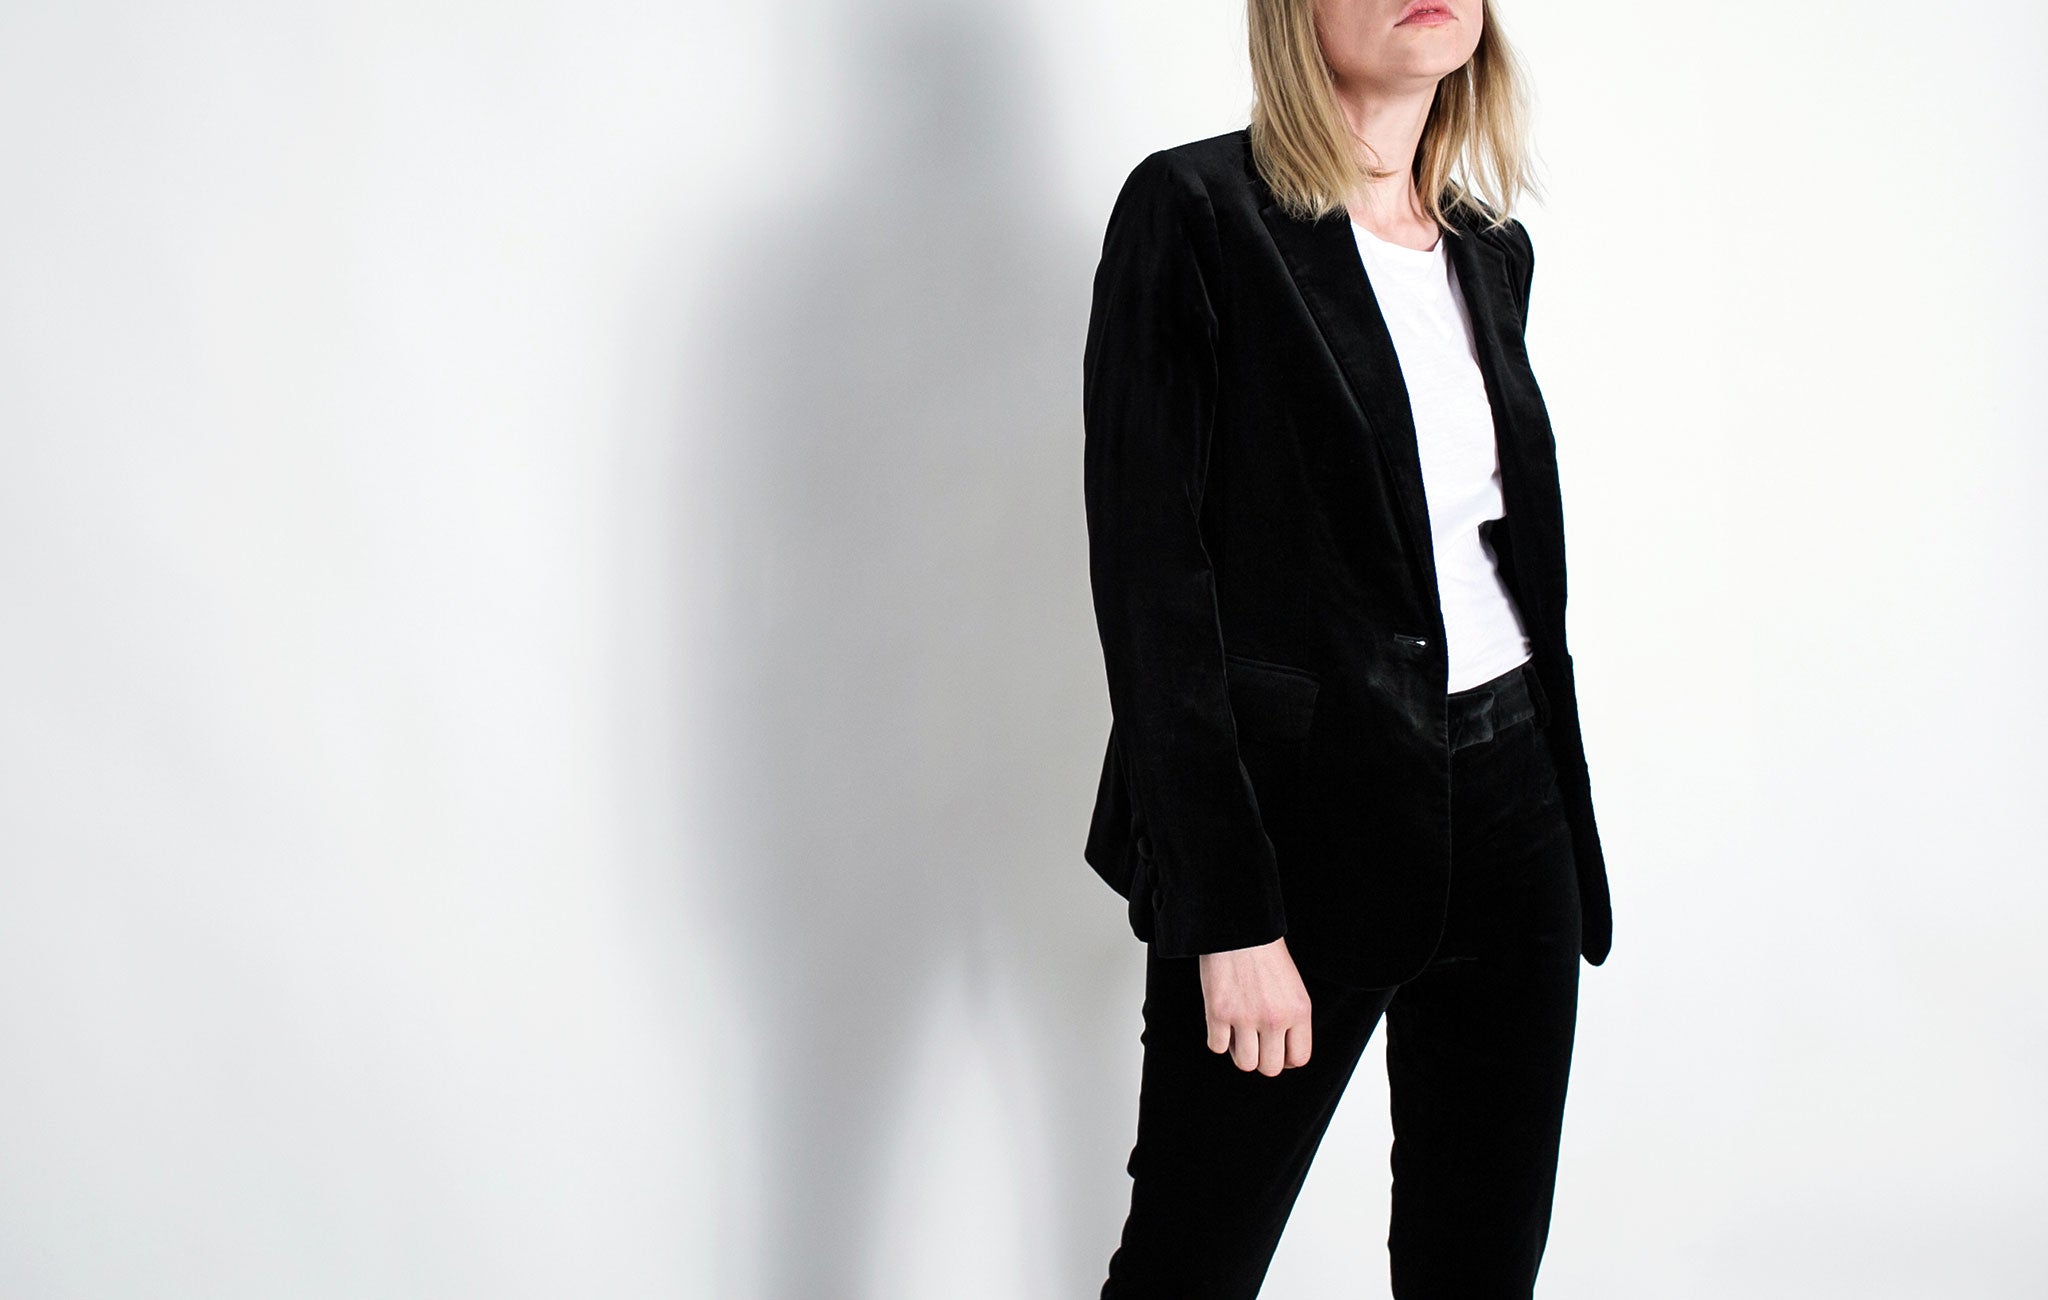 Frame denim velvet on trend minimalist suit from The UNDONE